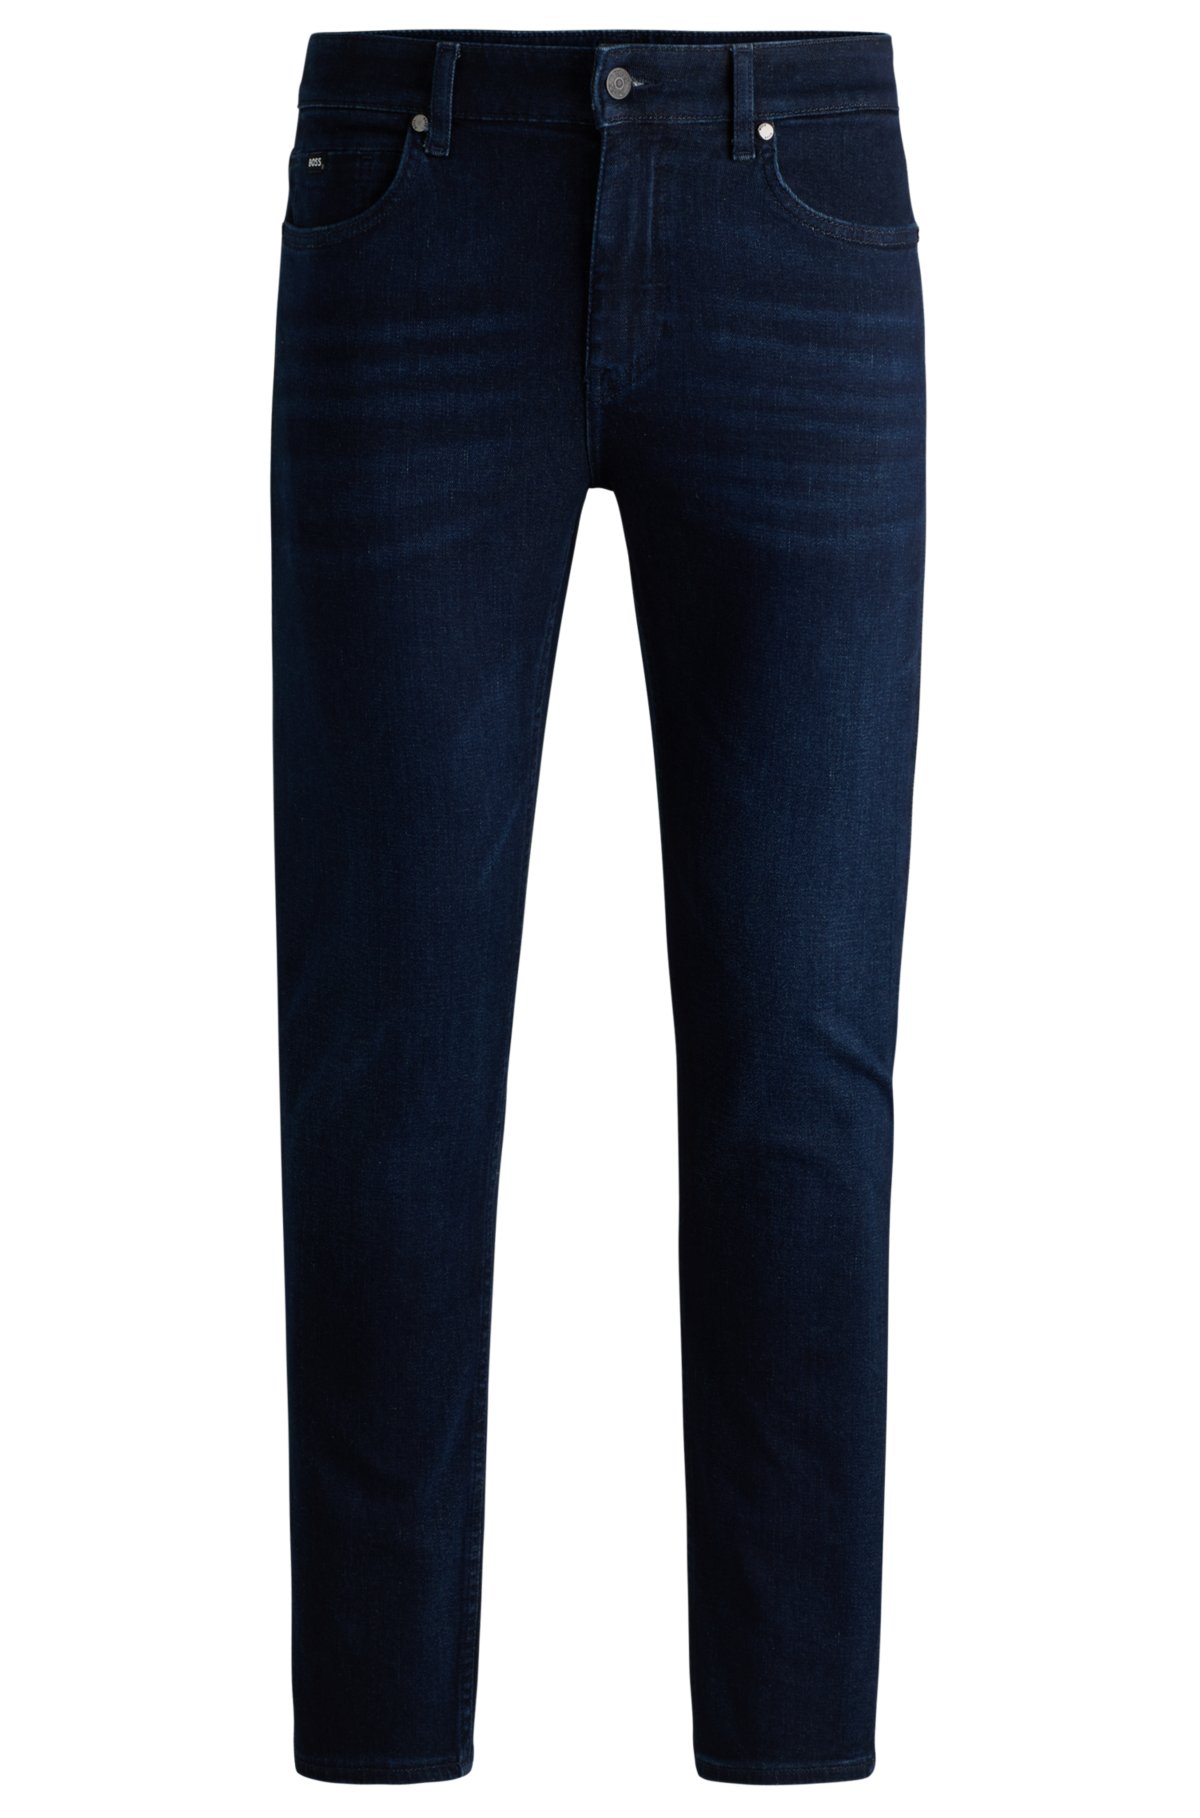 Slim-fit jeans in dark-blue super-soft denim, Dark Blue